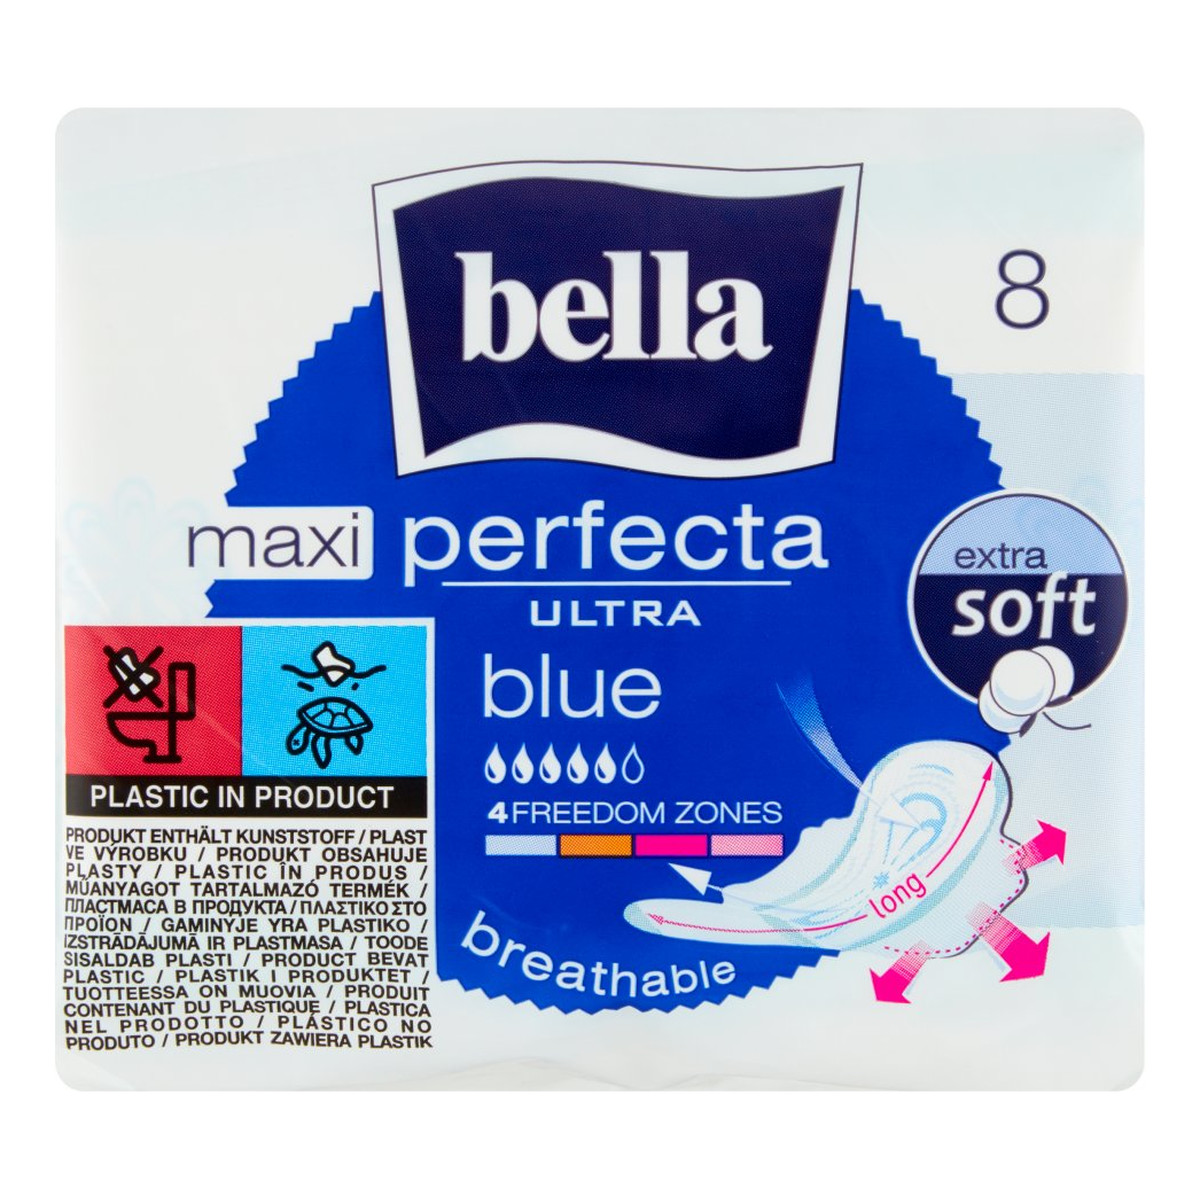 Bella Ultra Maxi Blue Perfecta Podpaski 8 Szt.